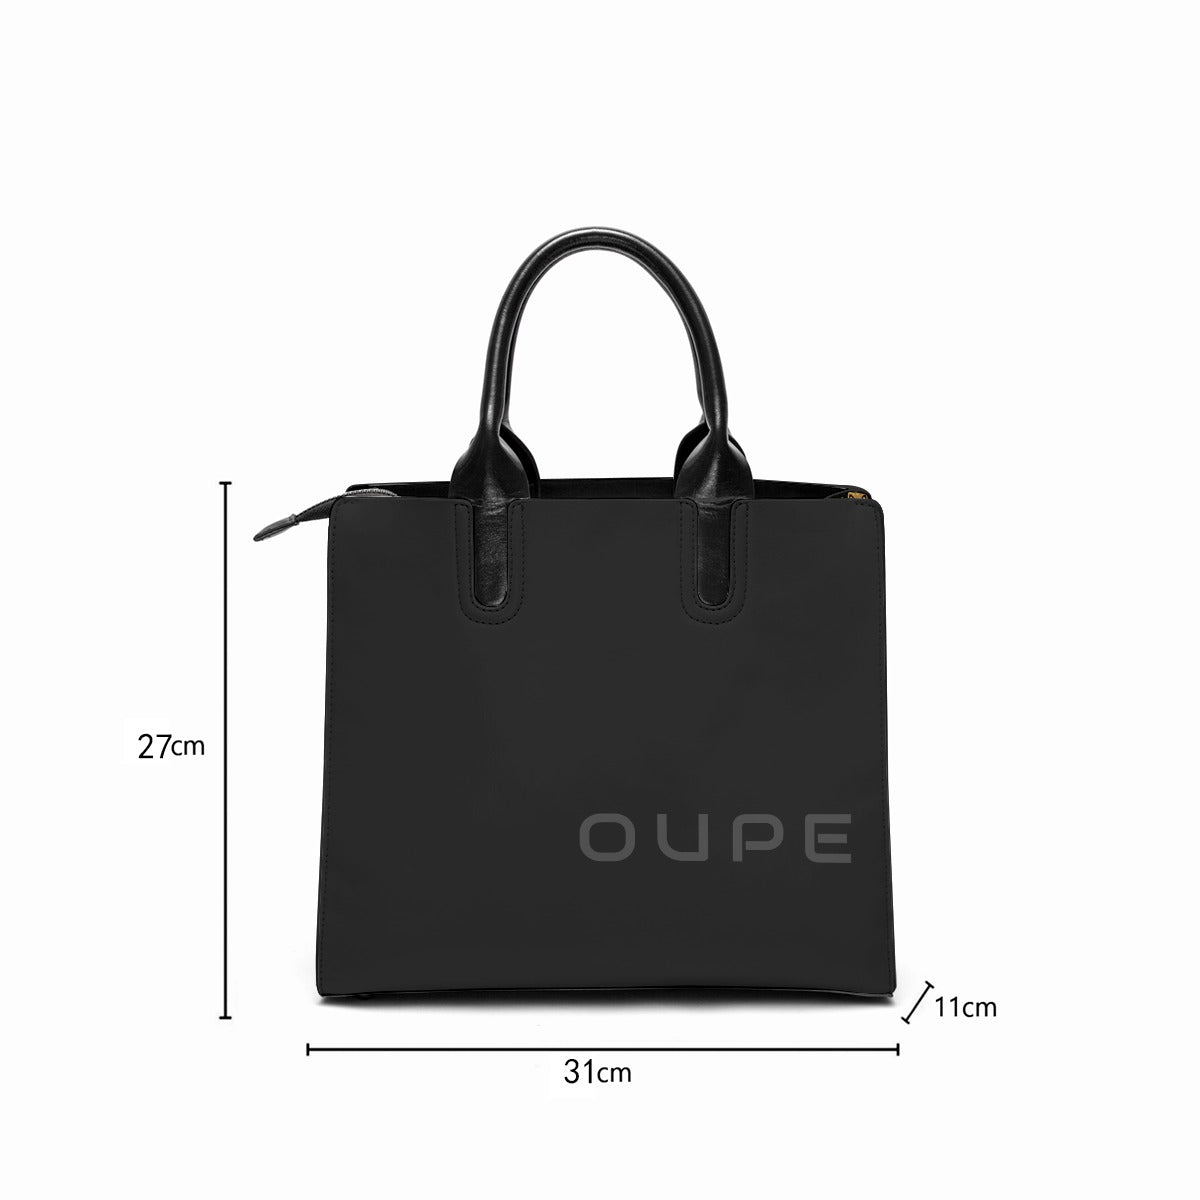 AC BAROQUE "OUPE' Square Tote Bag